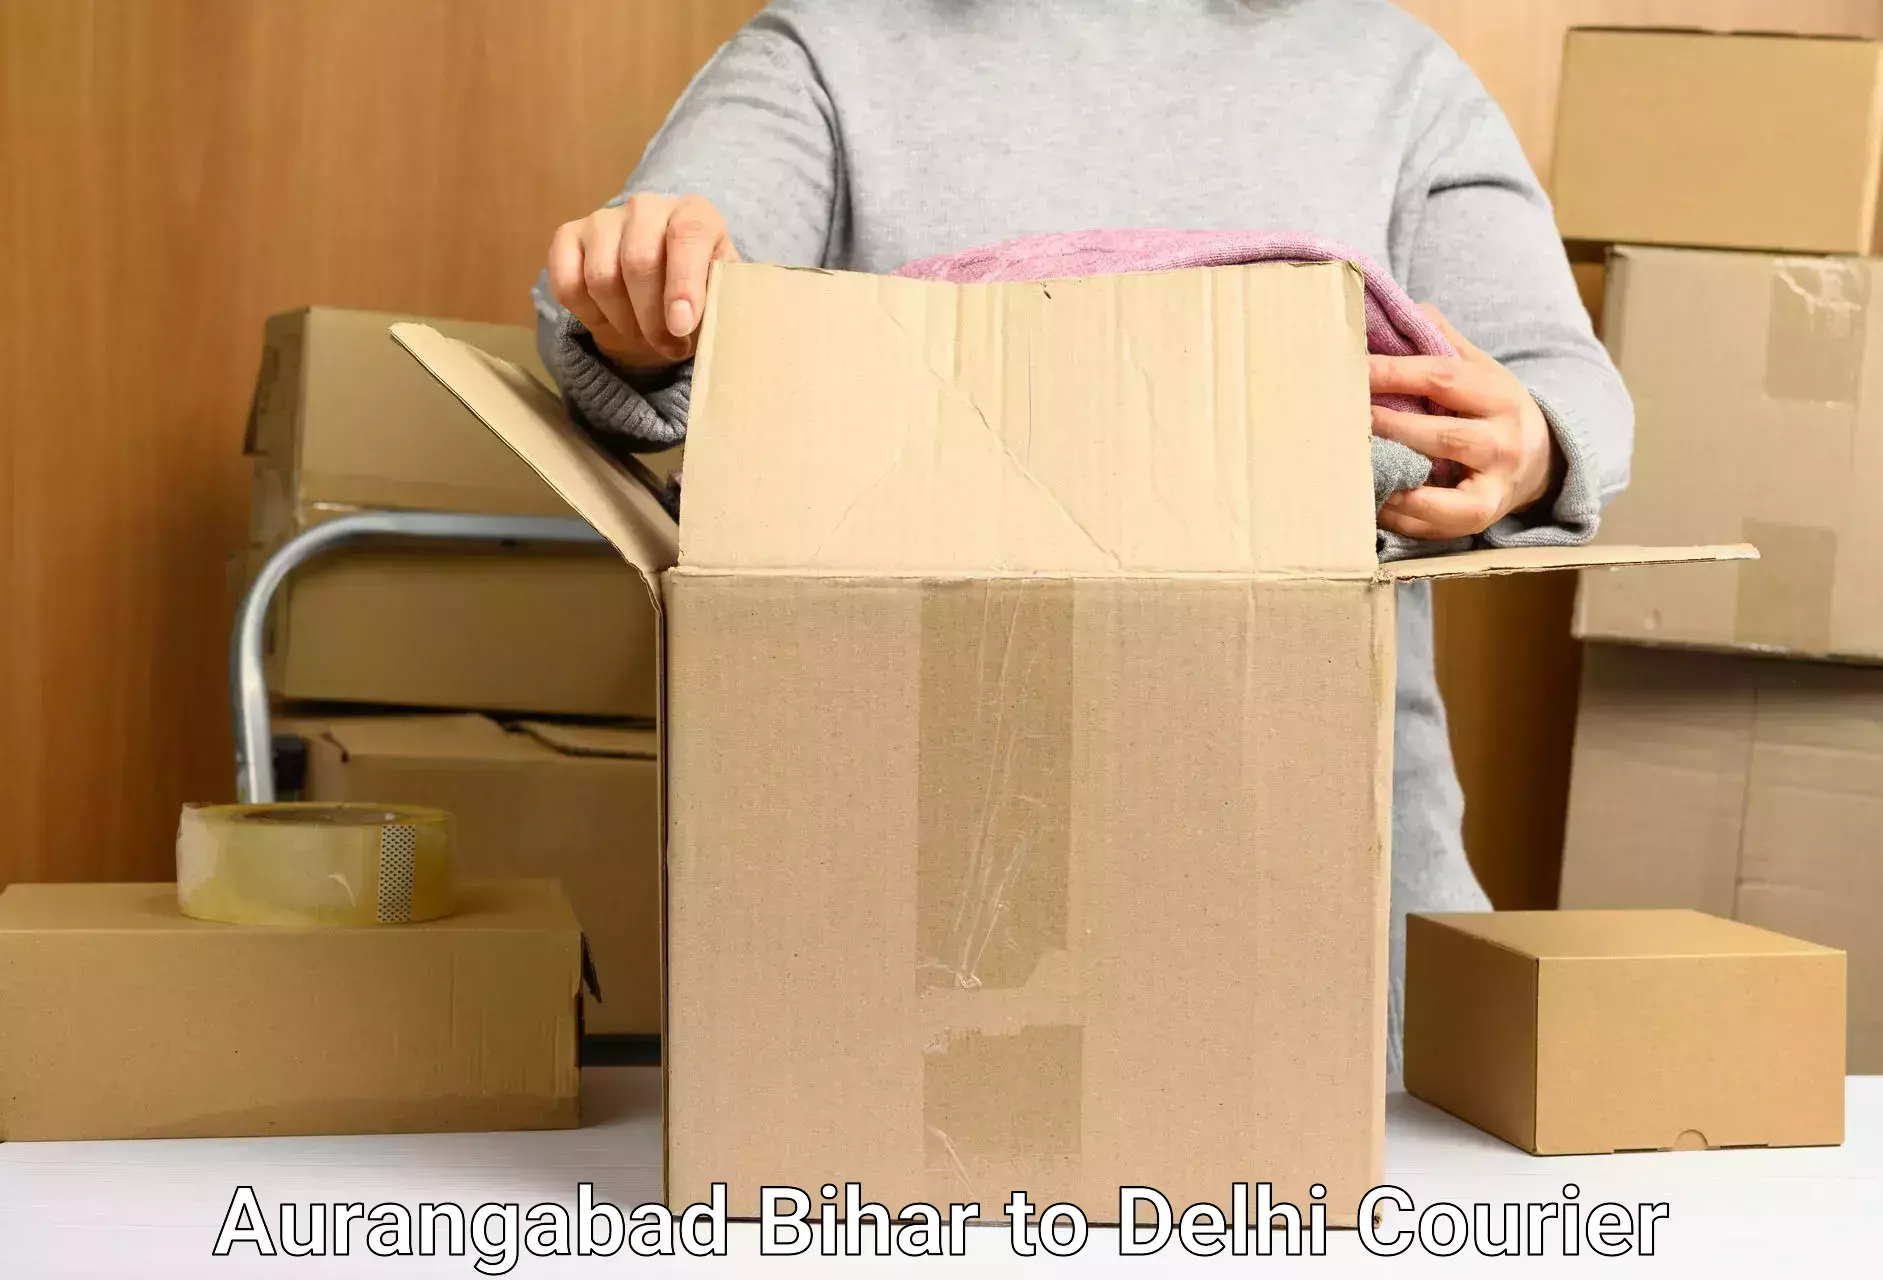 Specialized shipment handling Aurangabad Bihar to Jawaharlal Nehru University New Delhi